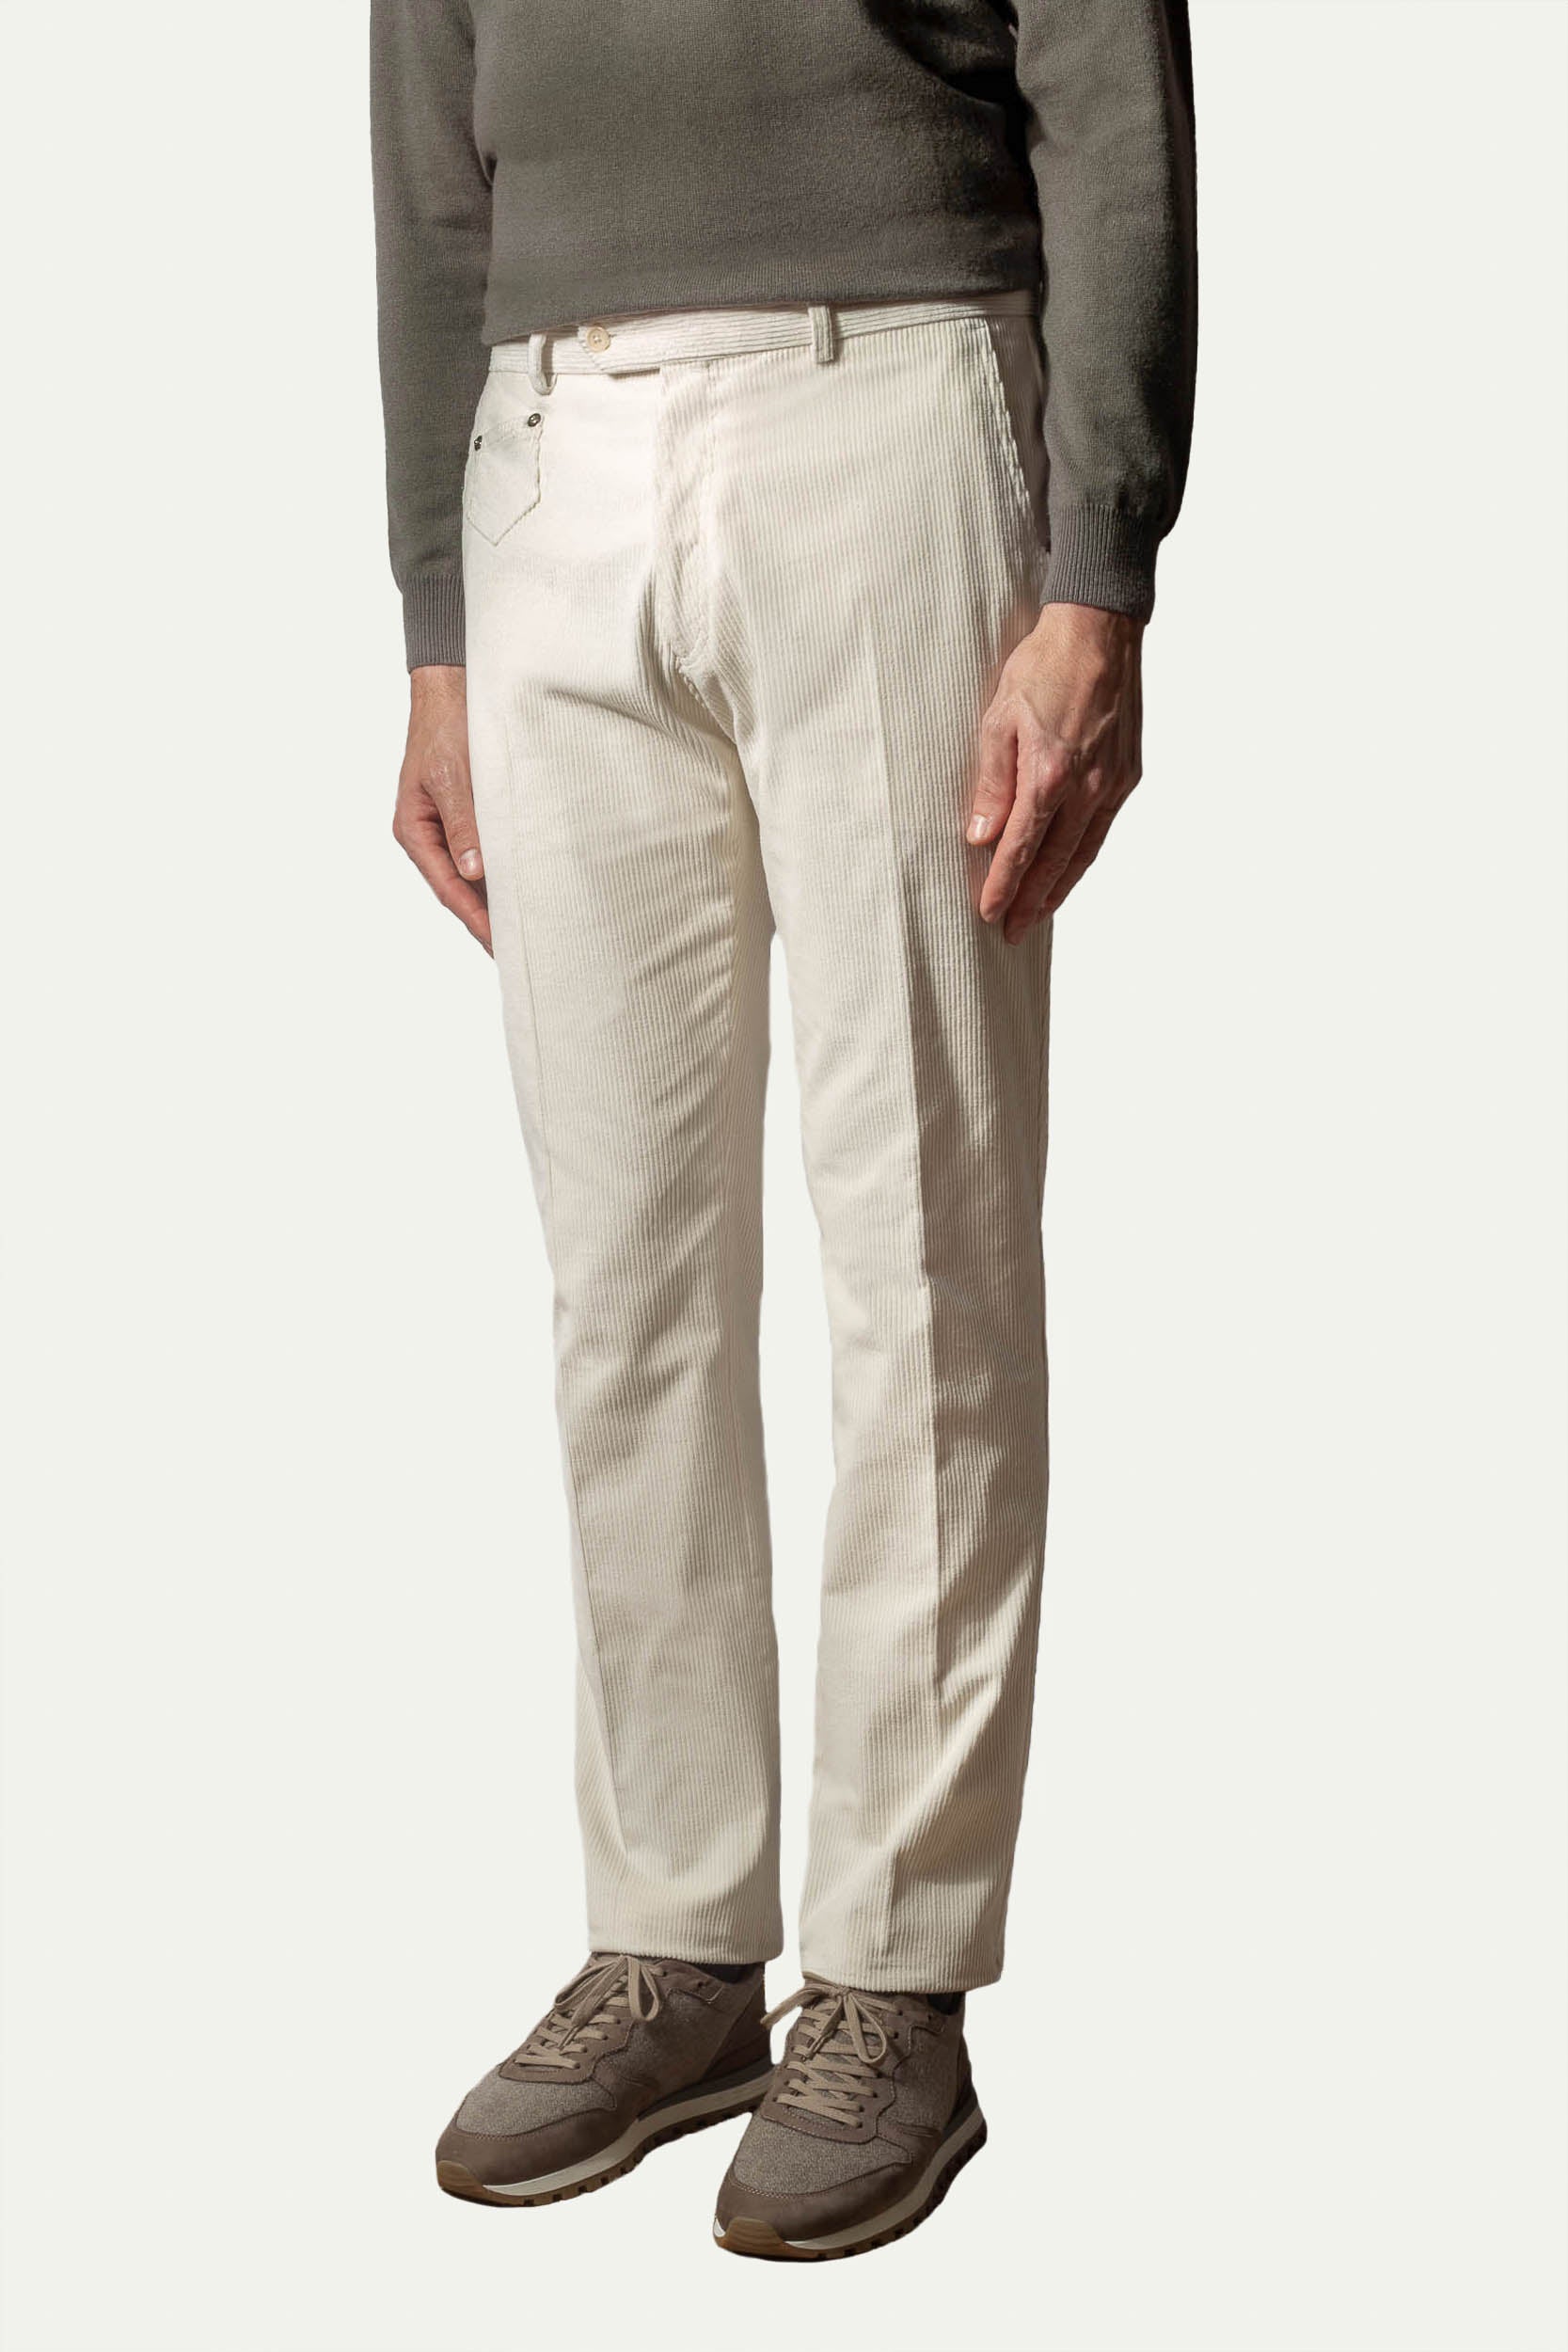 Buy MARK LEUTE Corduroy Trouser for Men. (30, Black) at Amazon.in